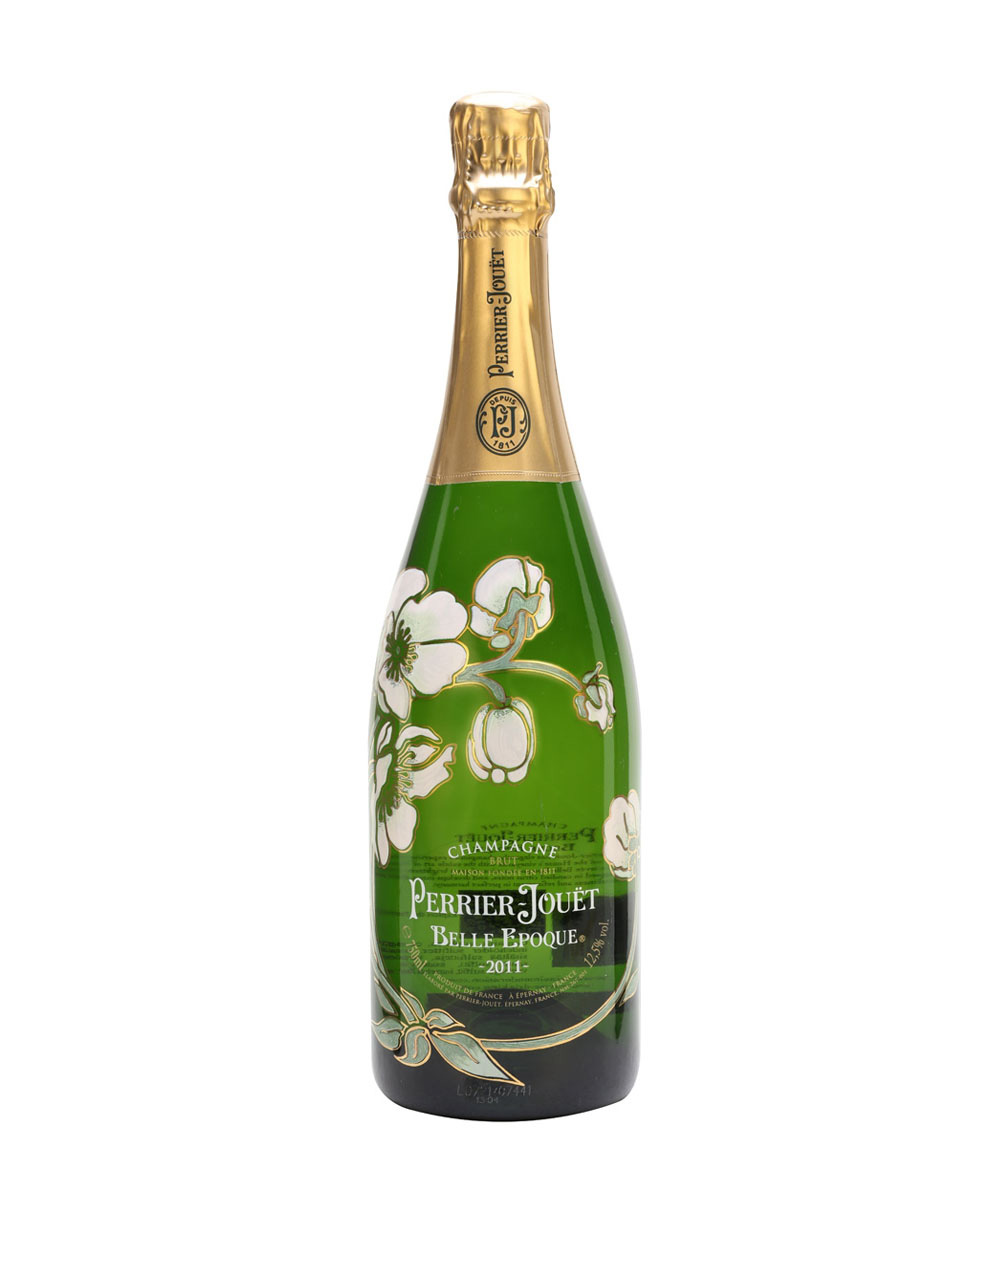 Perrier Jouet Belle Epoque Brut 2011 Champagne